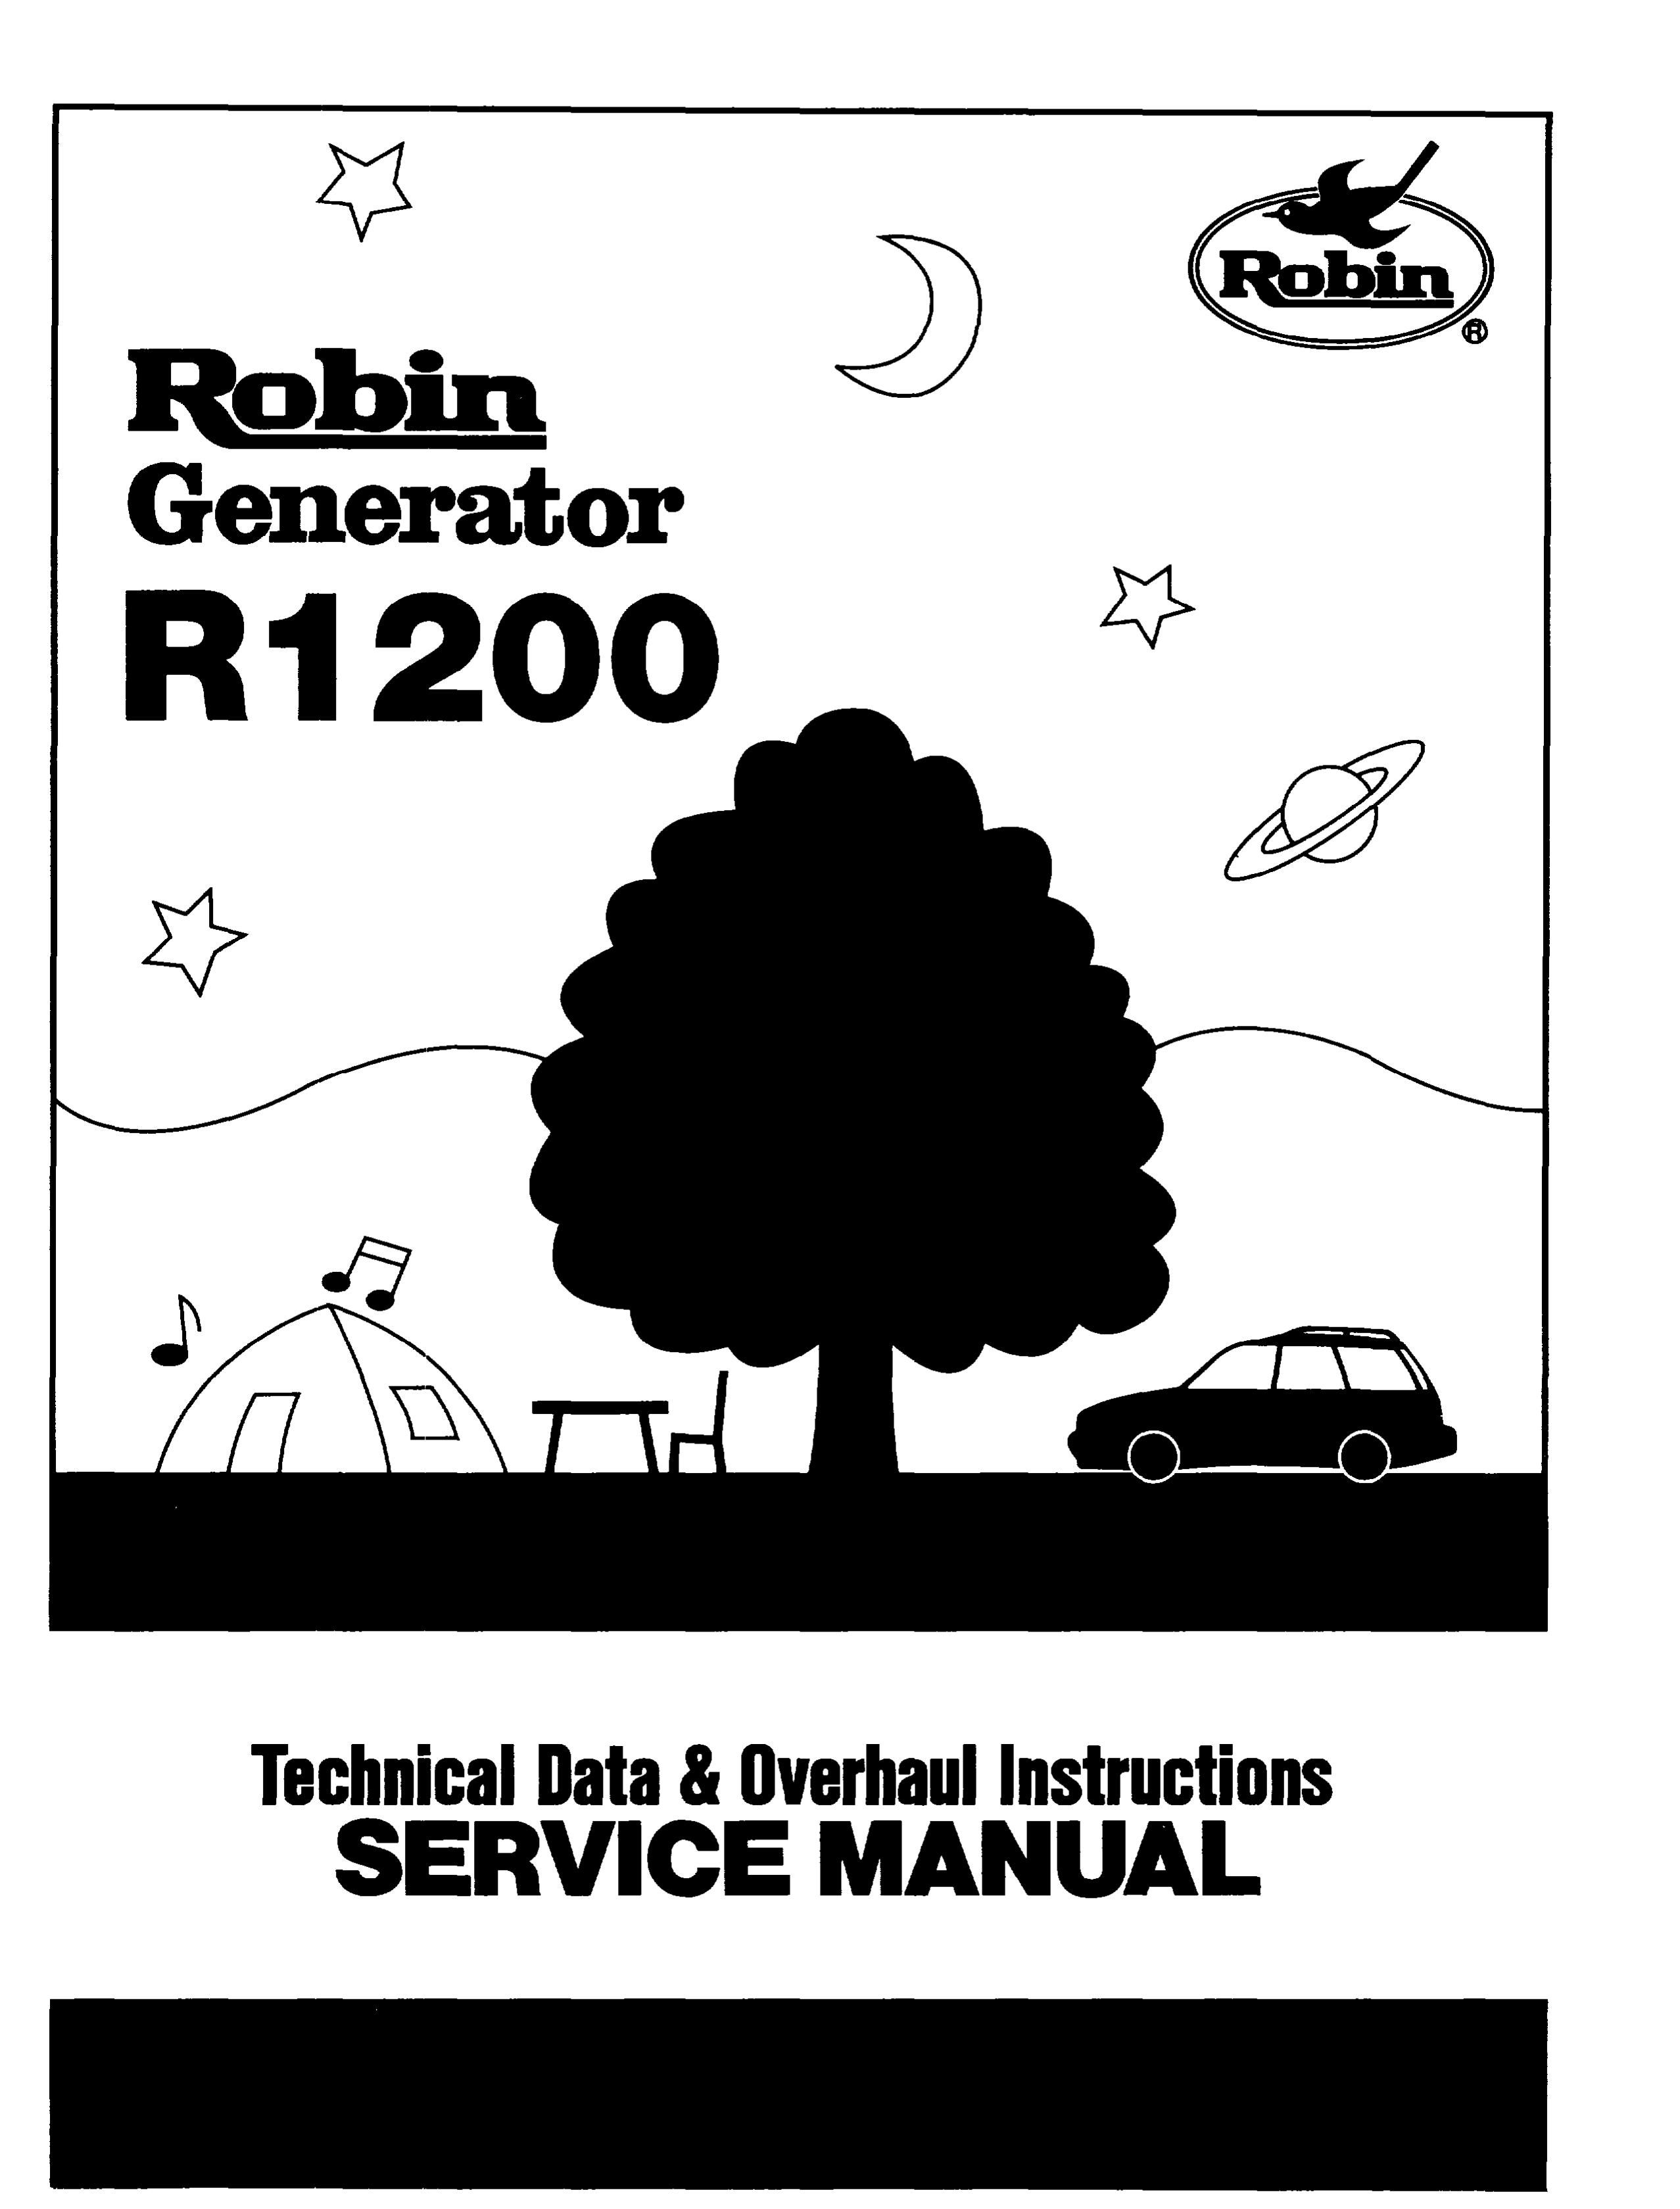 Subaru Robin Power Products R1200 Portable Generator User Manual